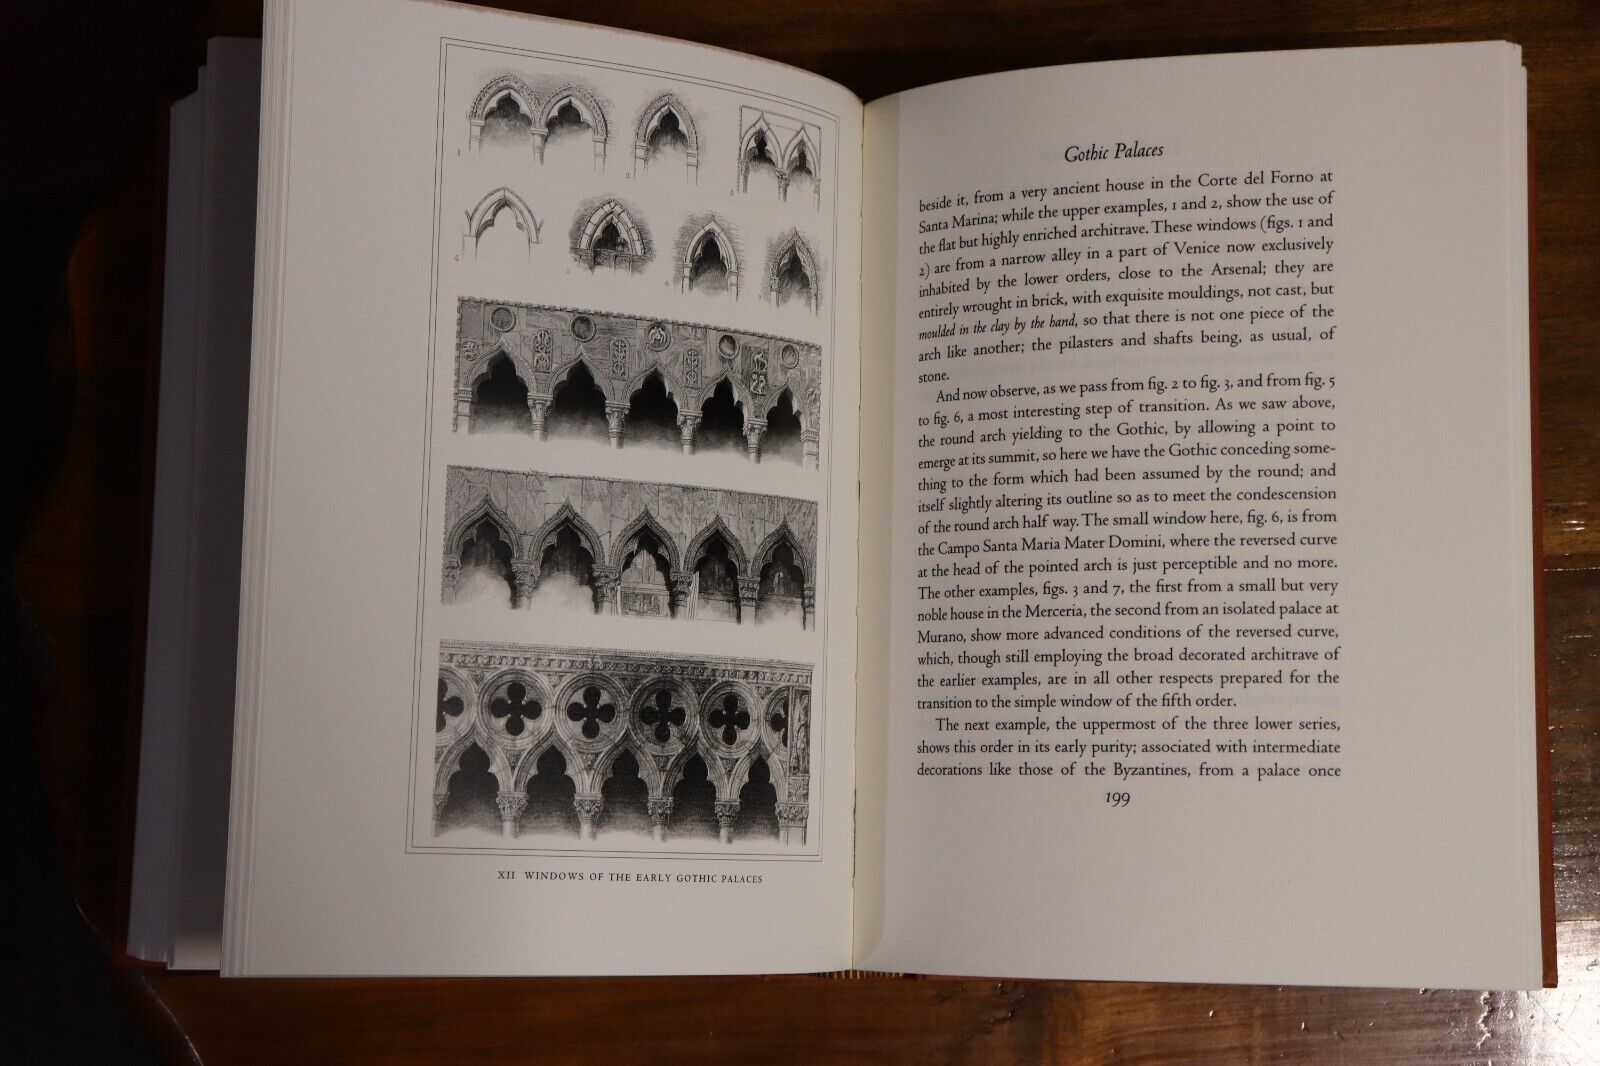 The Stones Of Venice: John Ruskin - 2001 - Folio Society Architecture Book